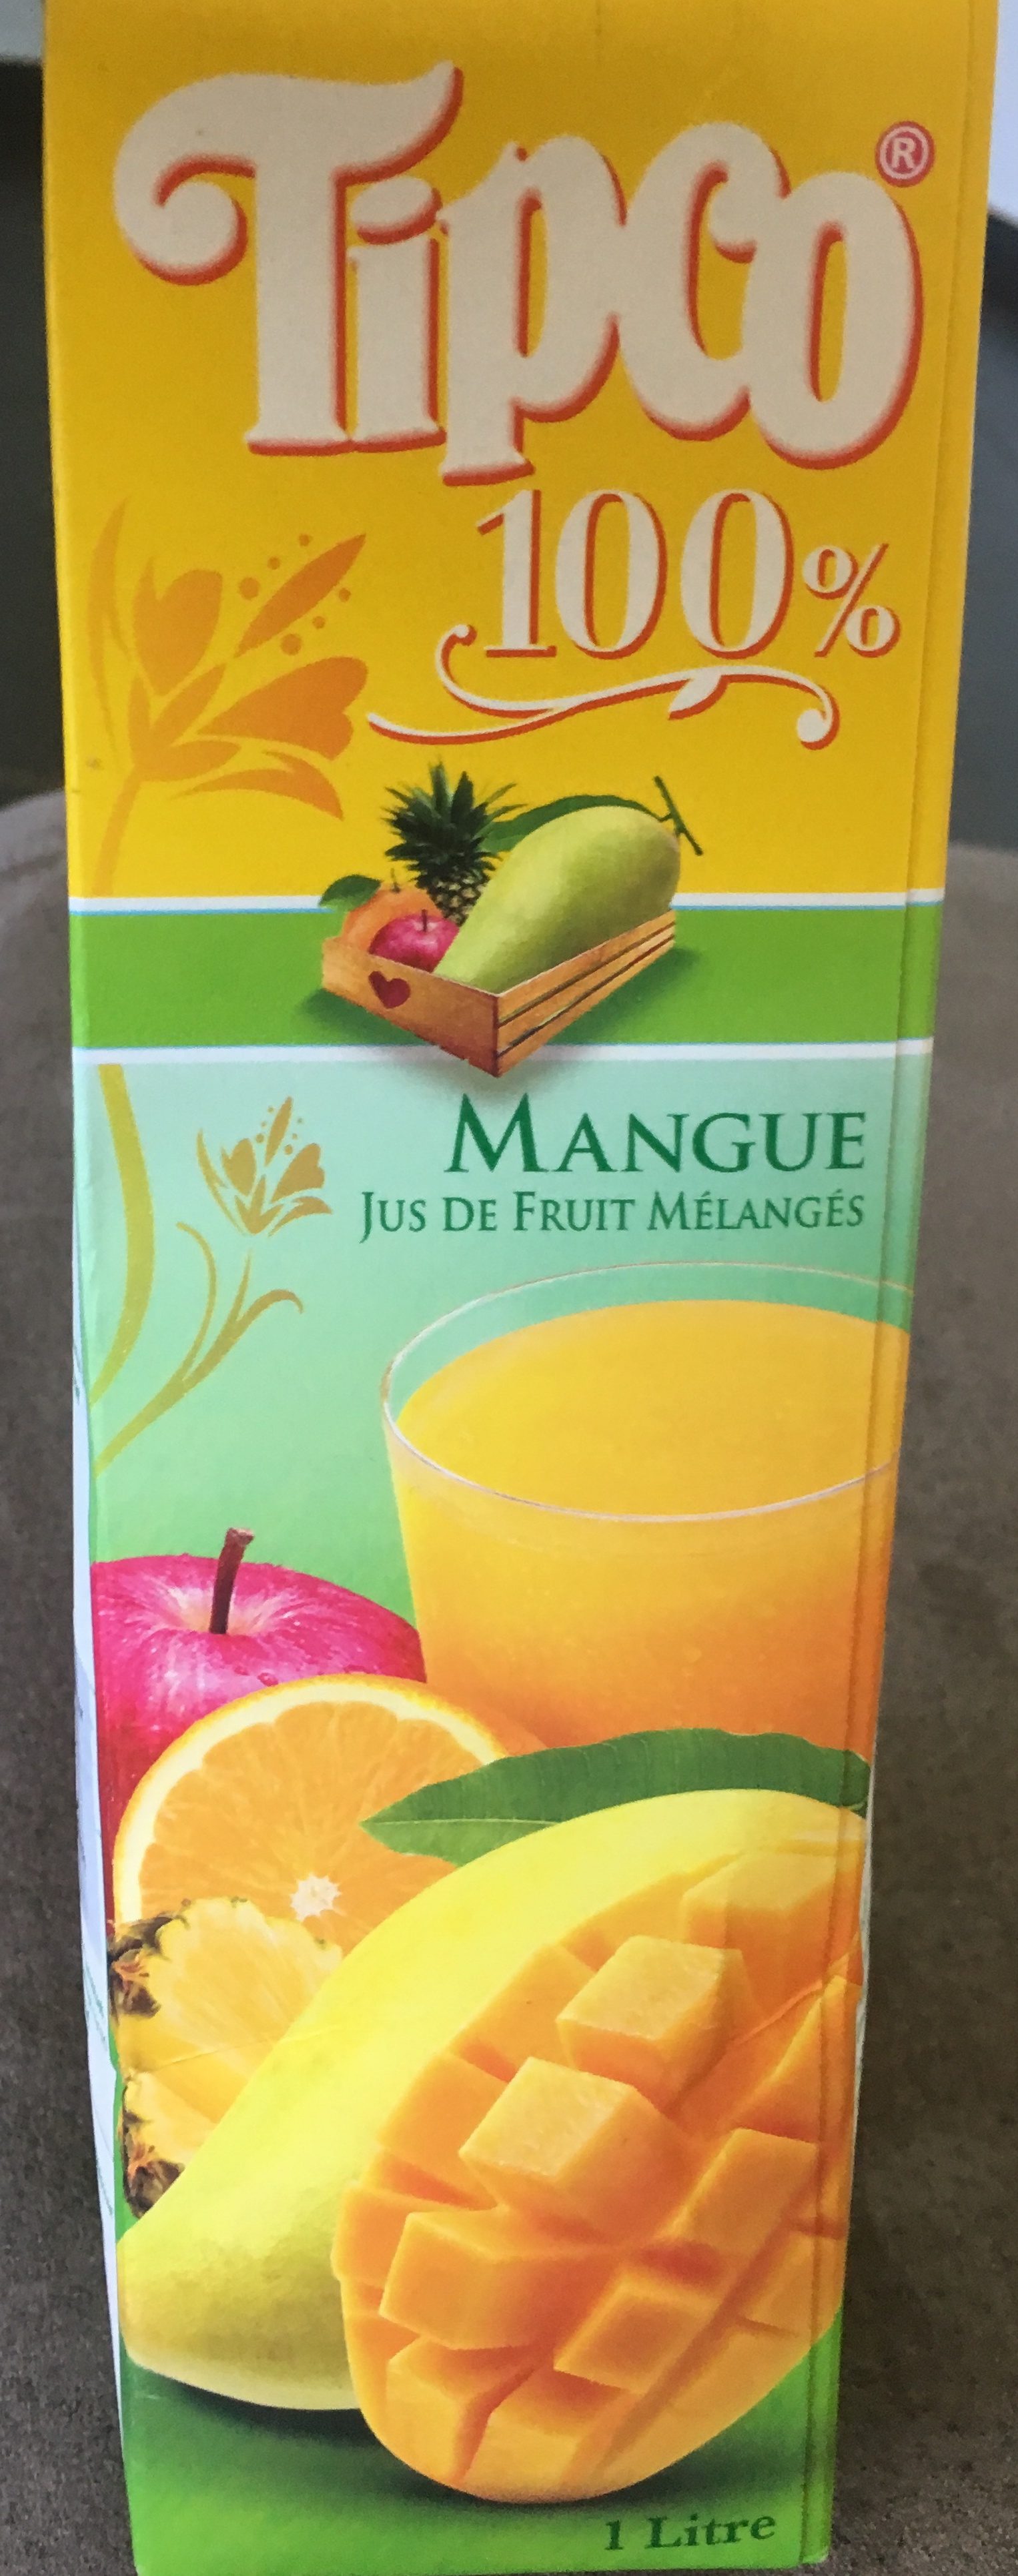 Tipco Mango Mixed Fruit Juice - Ingredients - fr